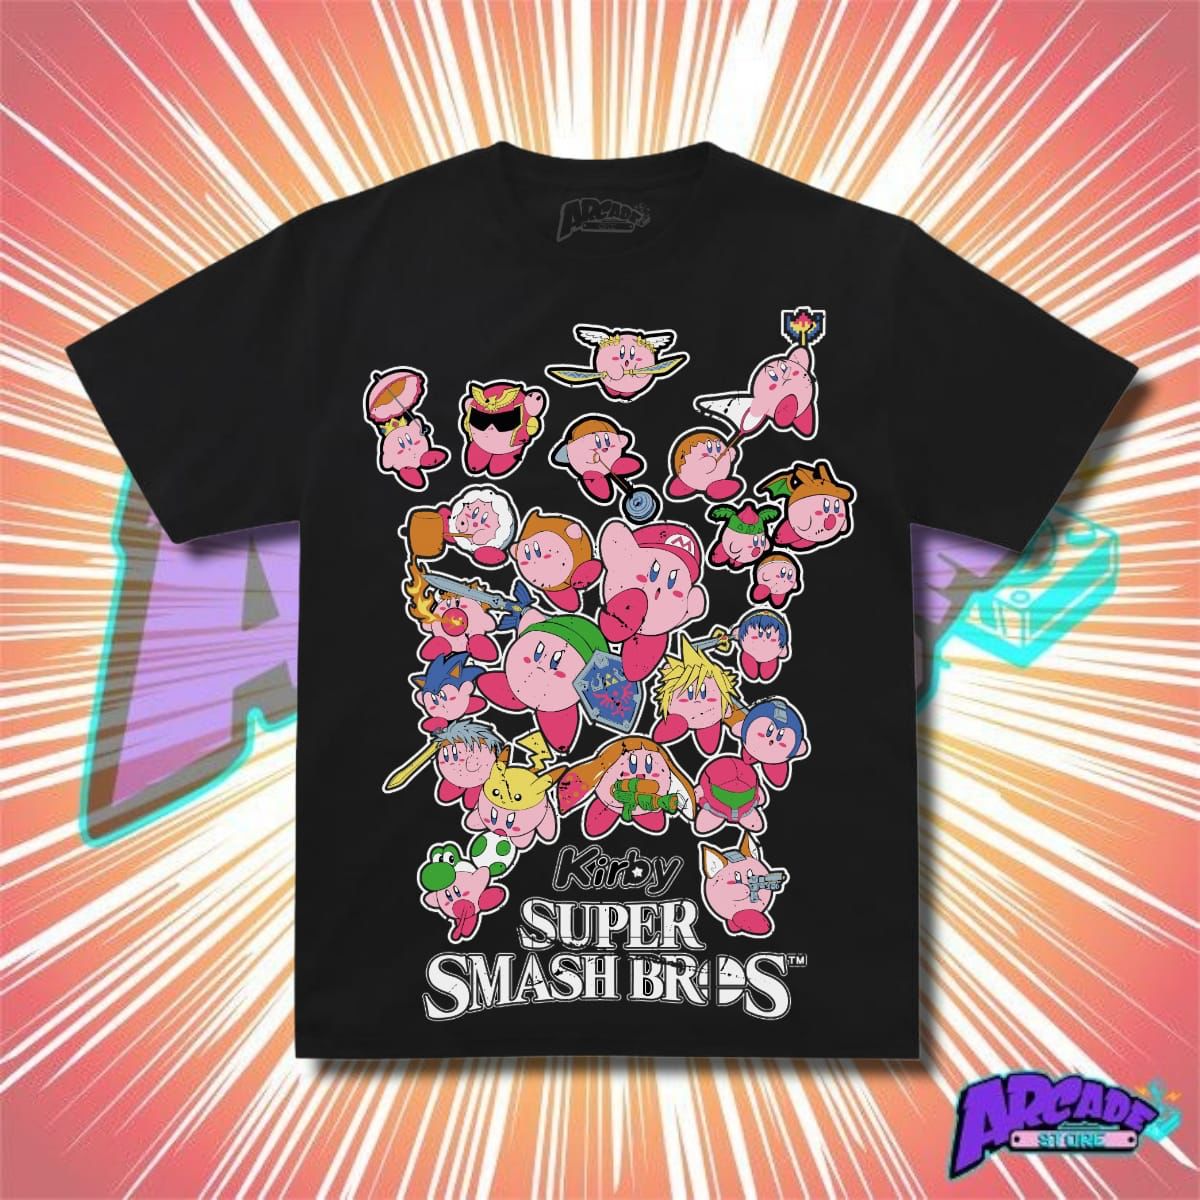 Playera Arcade Store Kirby Super Smash Bros